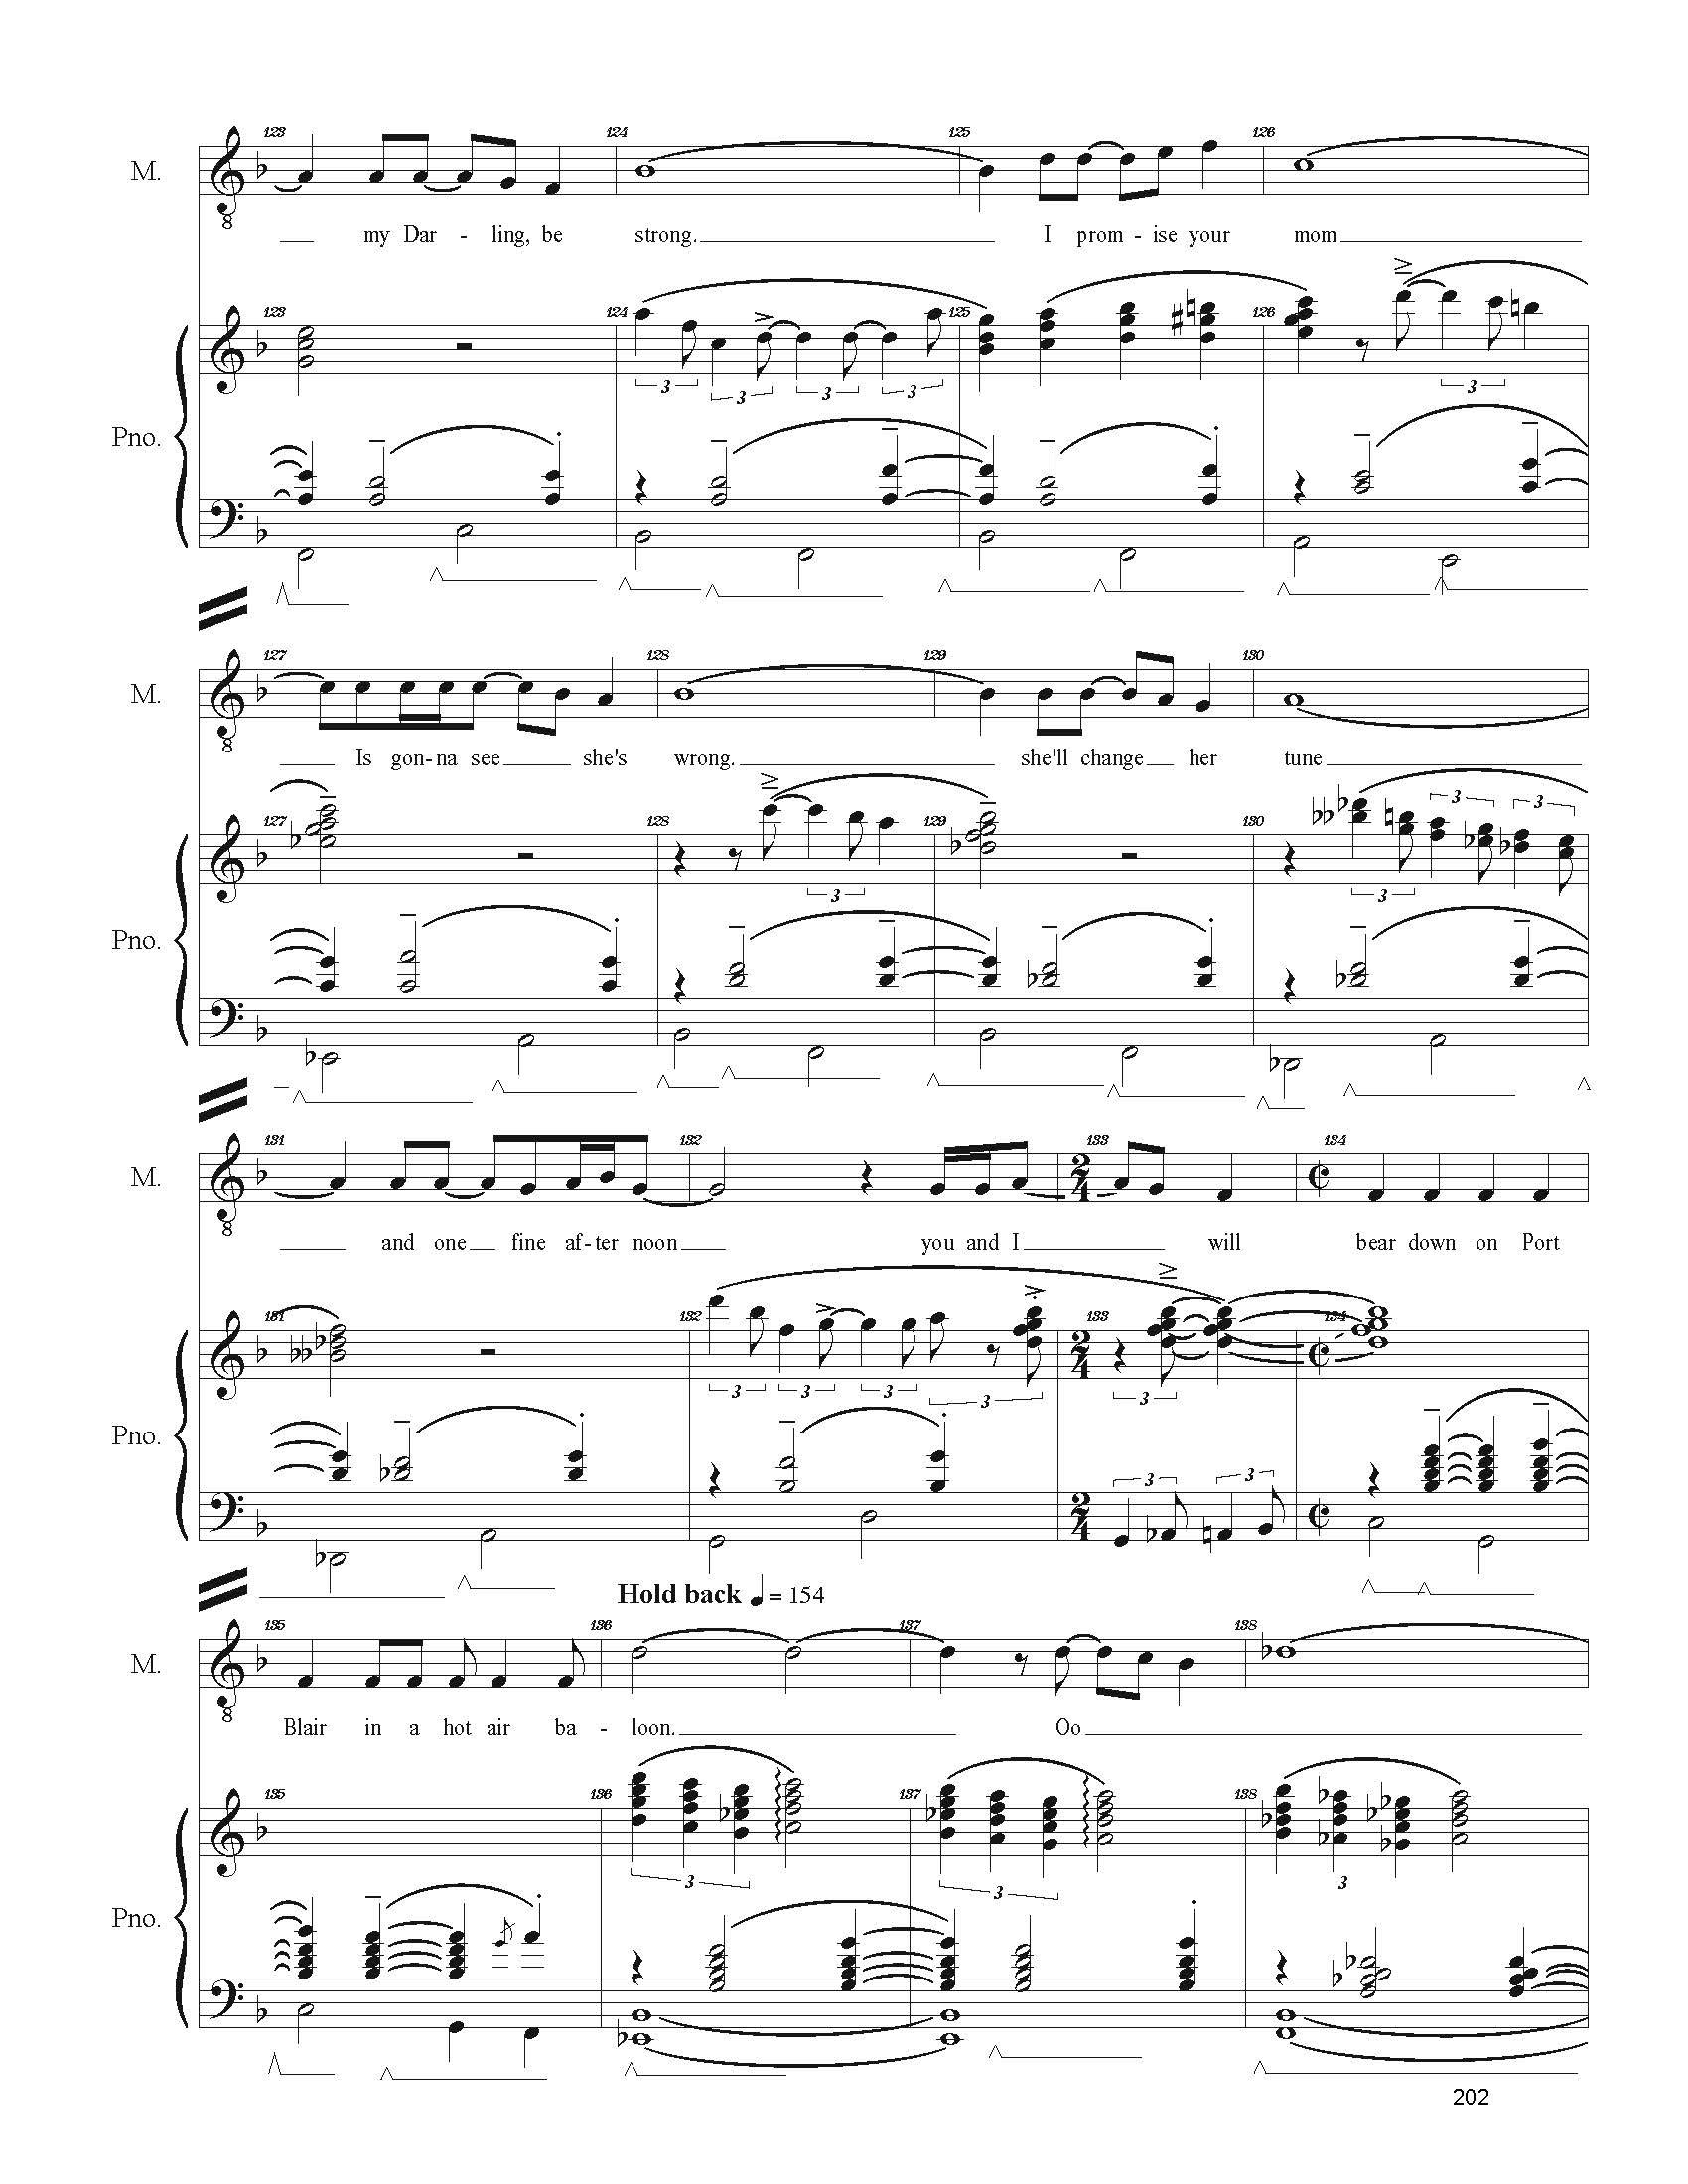 FULL PIANO VOCAL SCORE DRAFT 1 - Score_Page_202.jpg